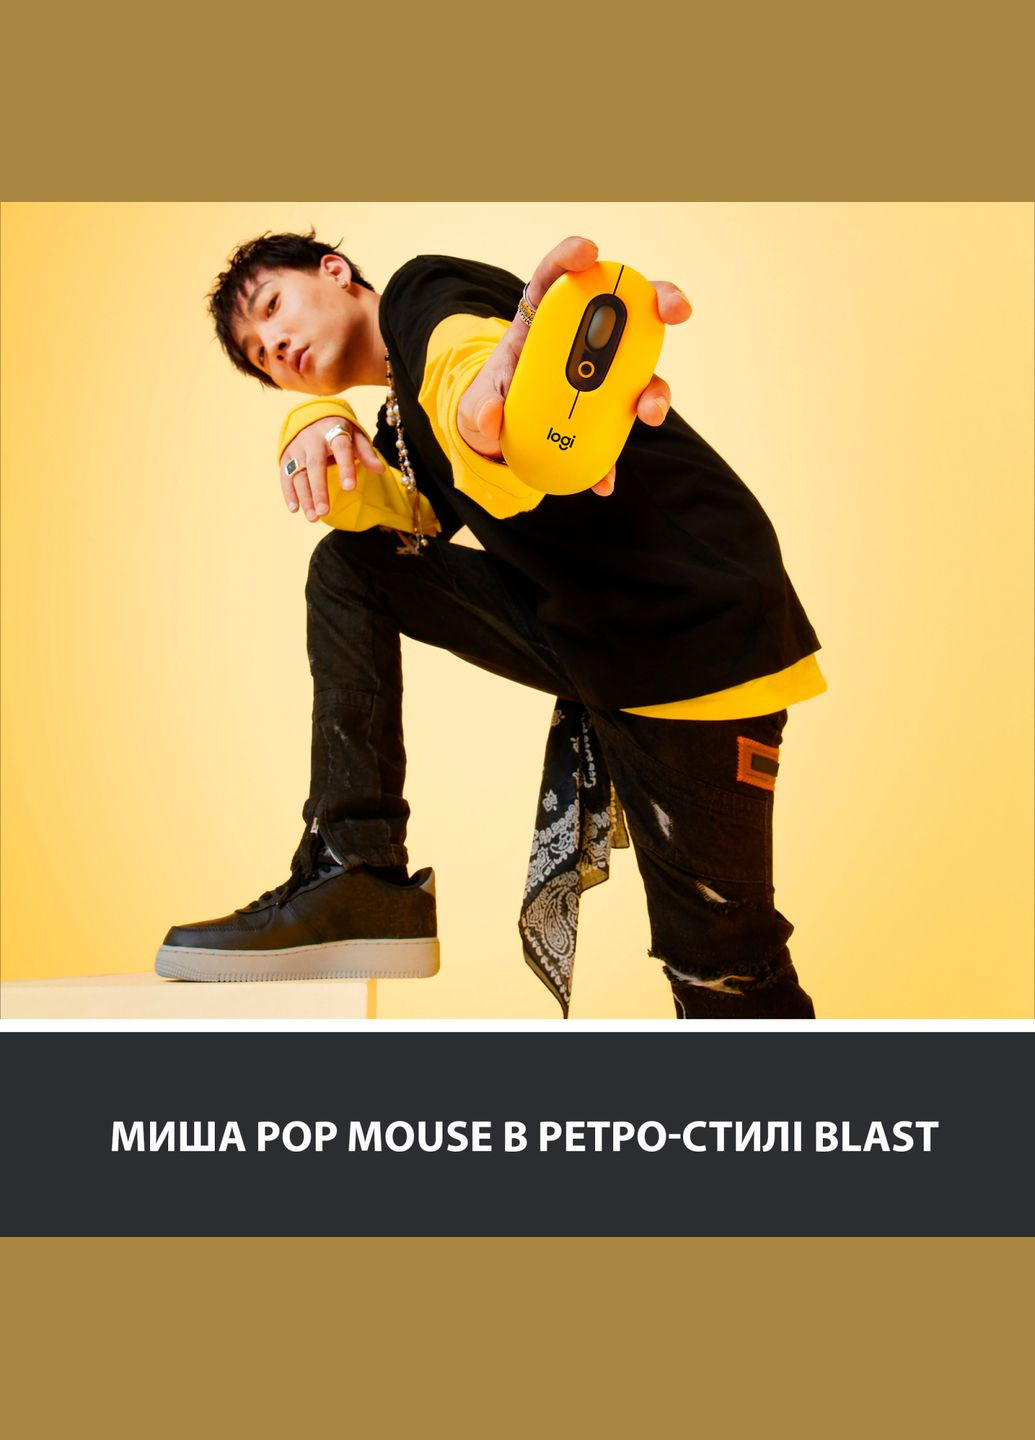 Мишка (910-006546) Logitech pop mouse bluetooth blast yellow (268143177)